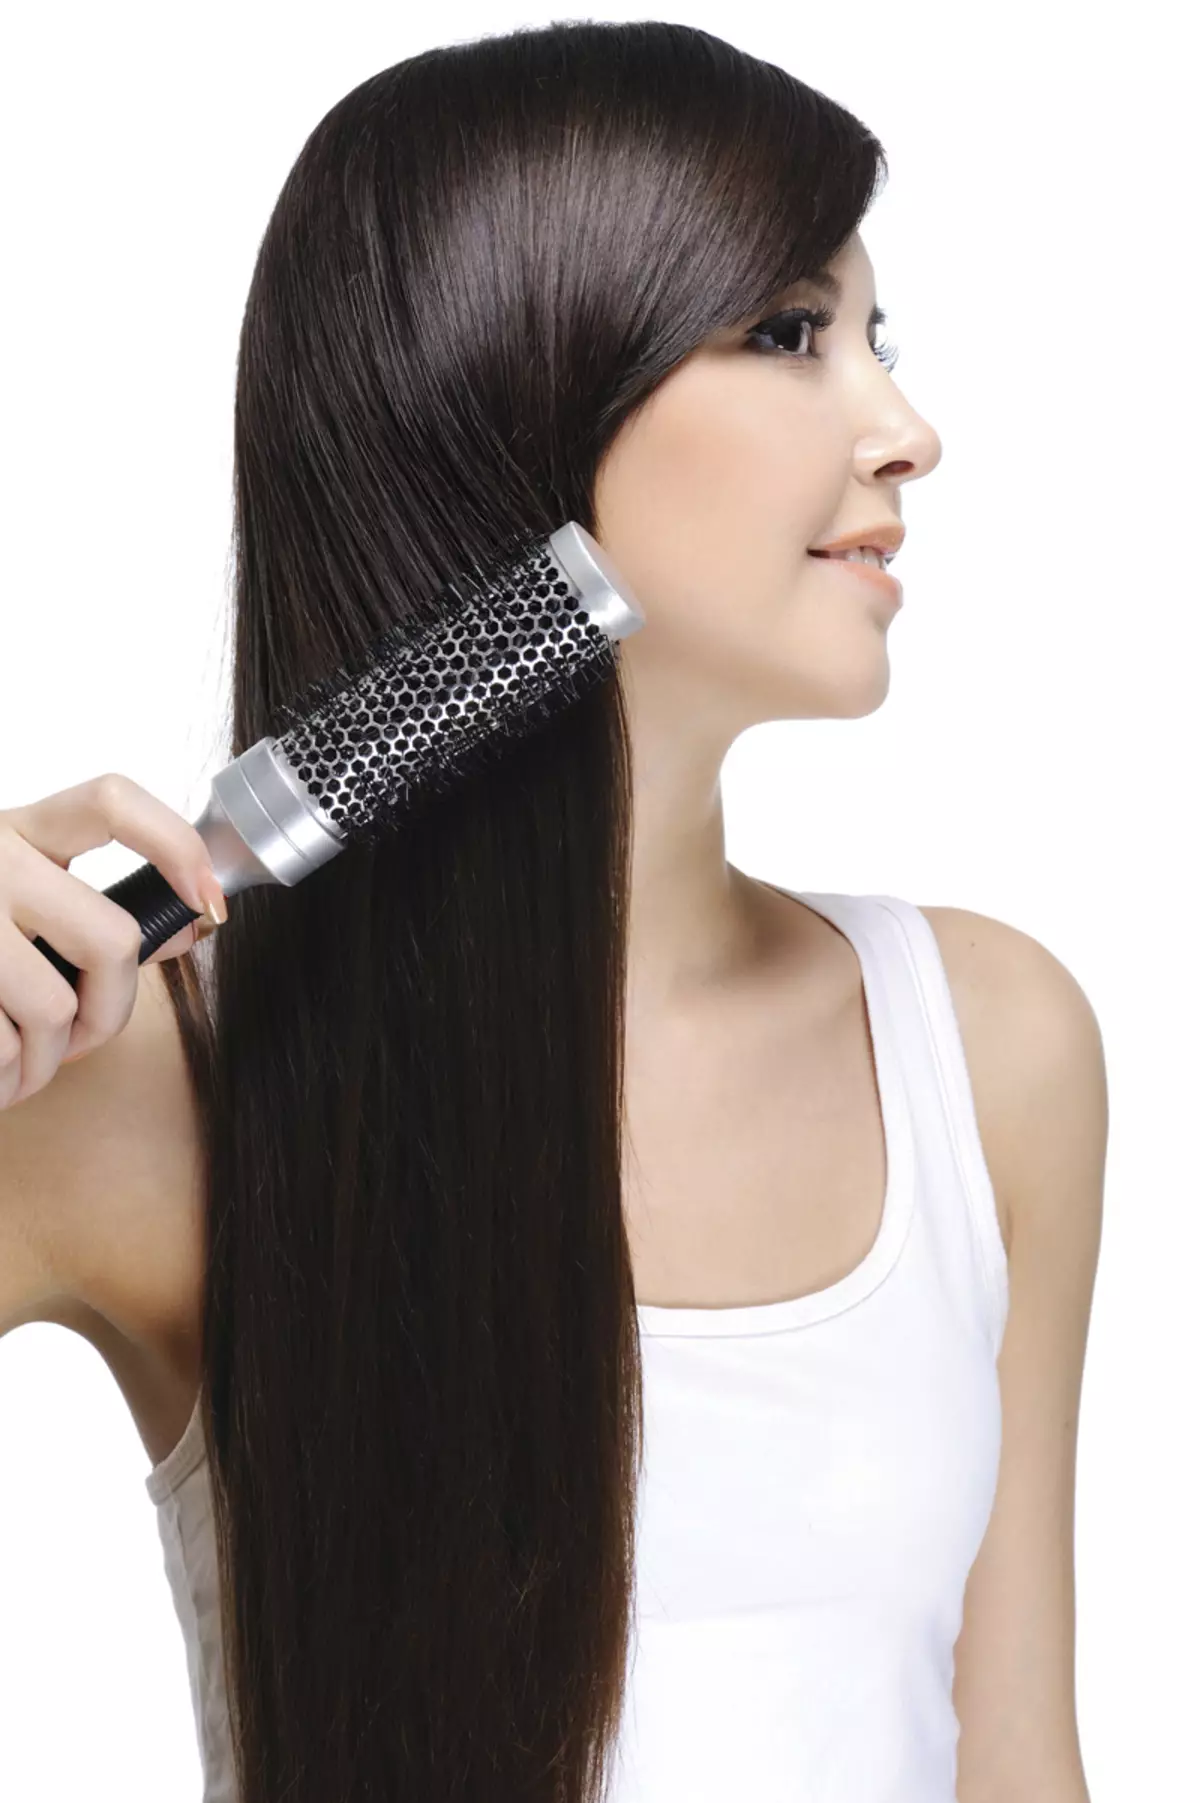 Šampon Estel Keratin: Sastav i karakteristike aplikacije Keratin Hair šampon iz Estela, recenzija 6065_14